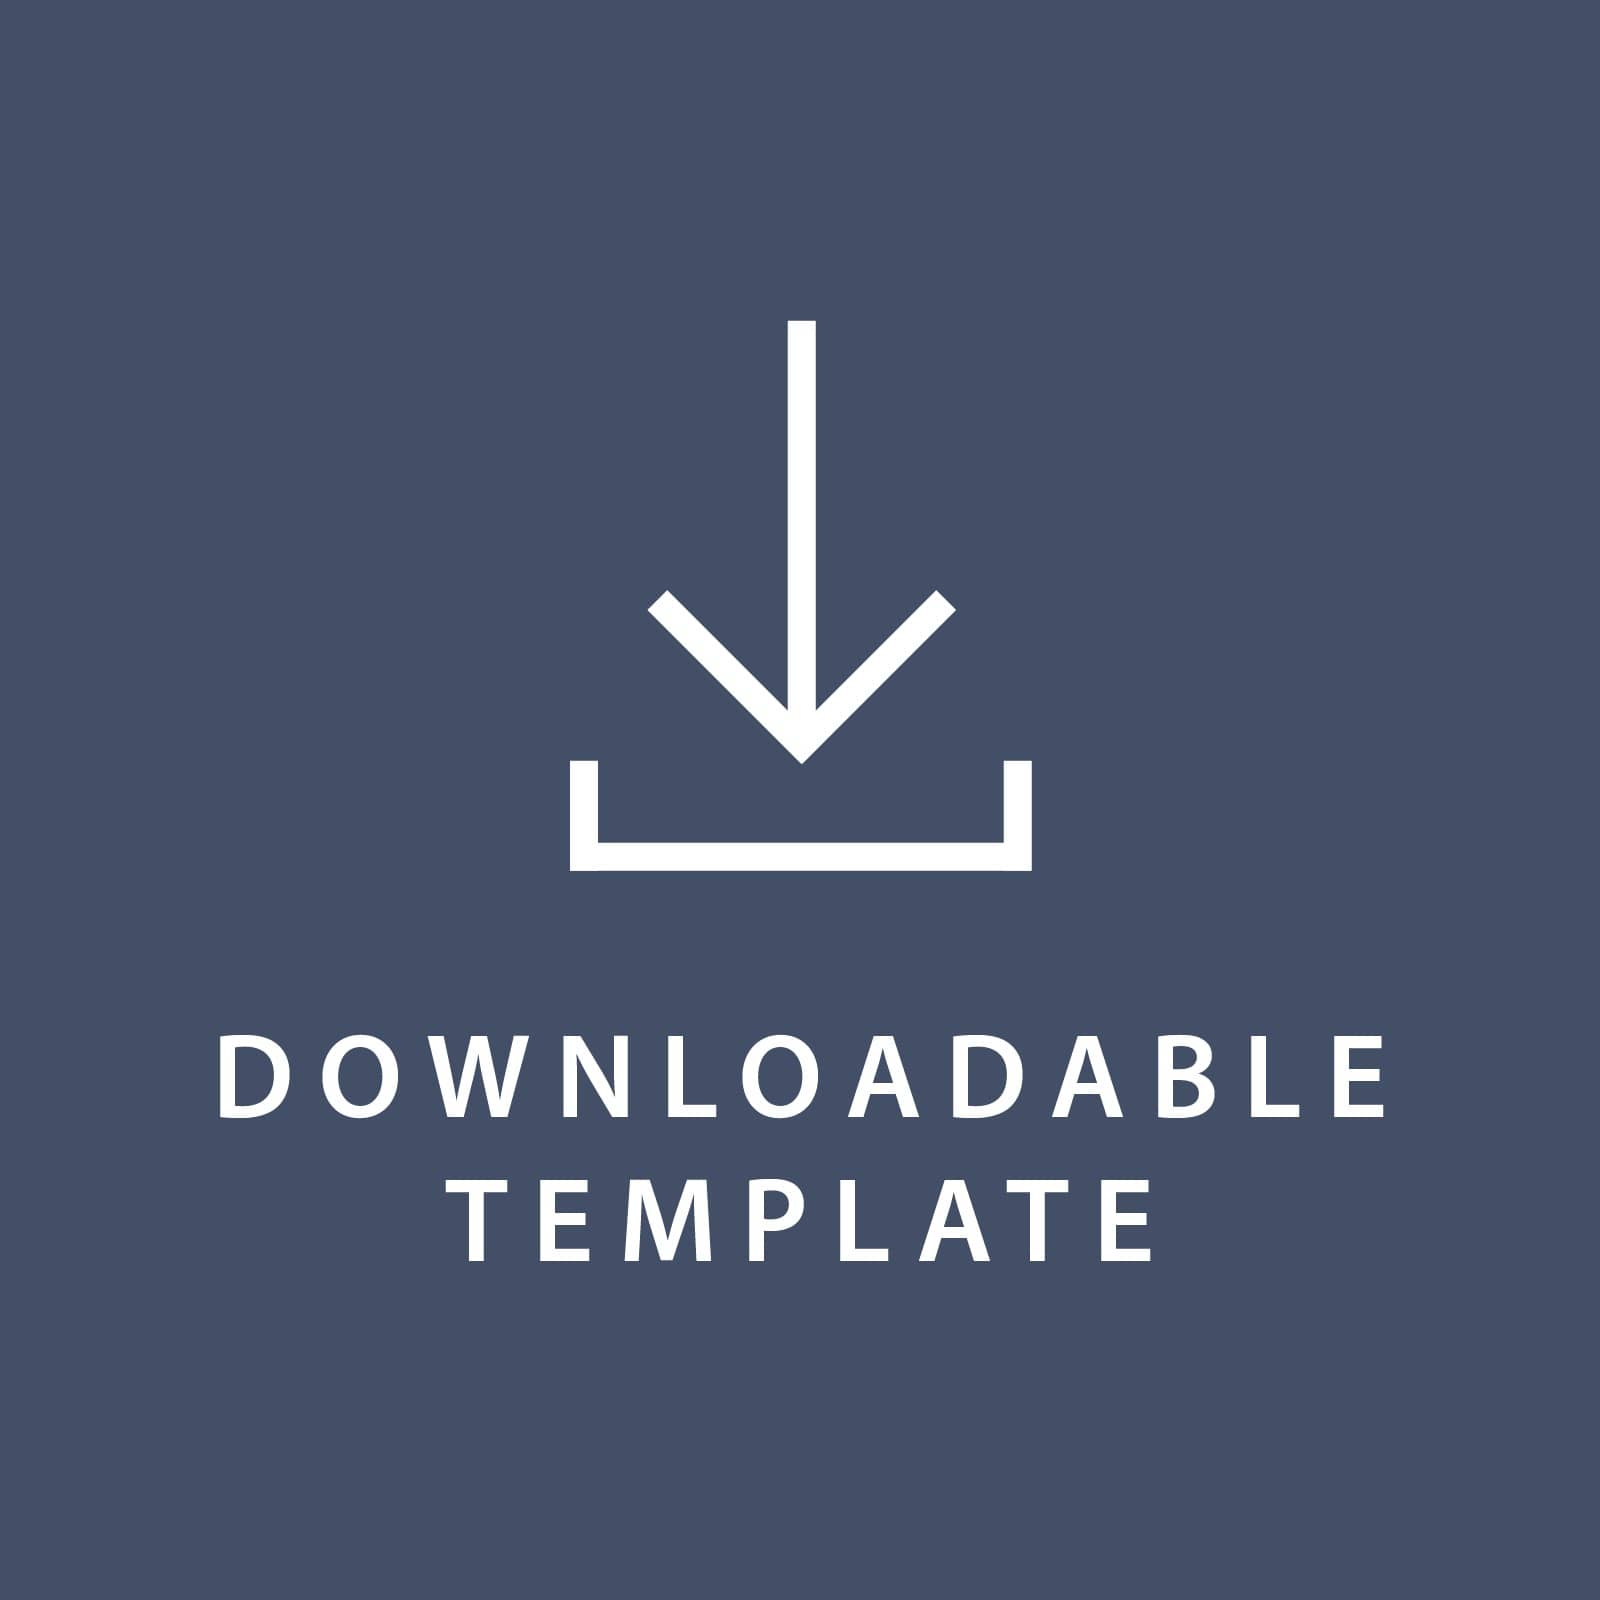 Template for 4.5 X 5.5 Note Cards Gartner Studios Template tmplt0965